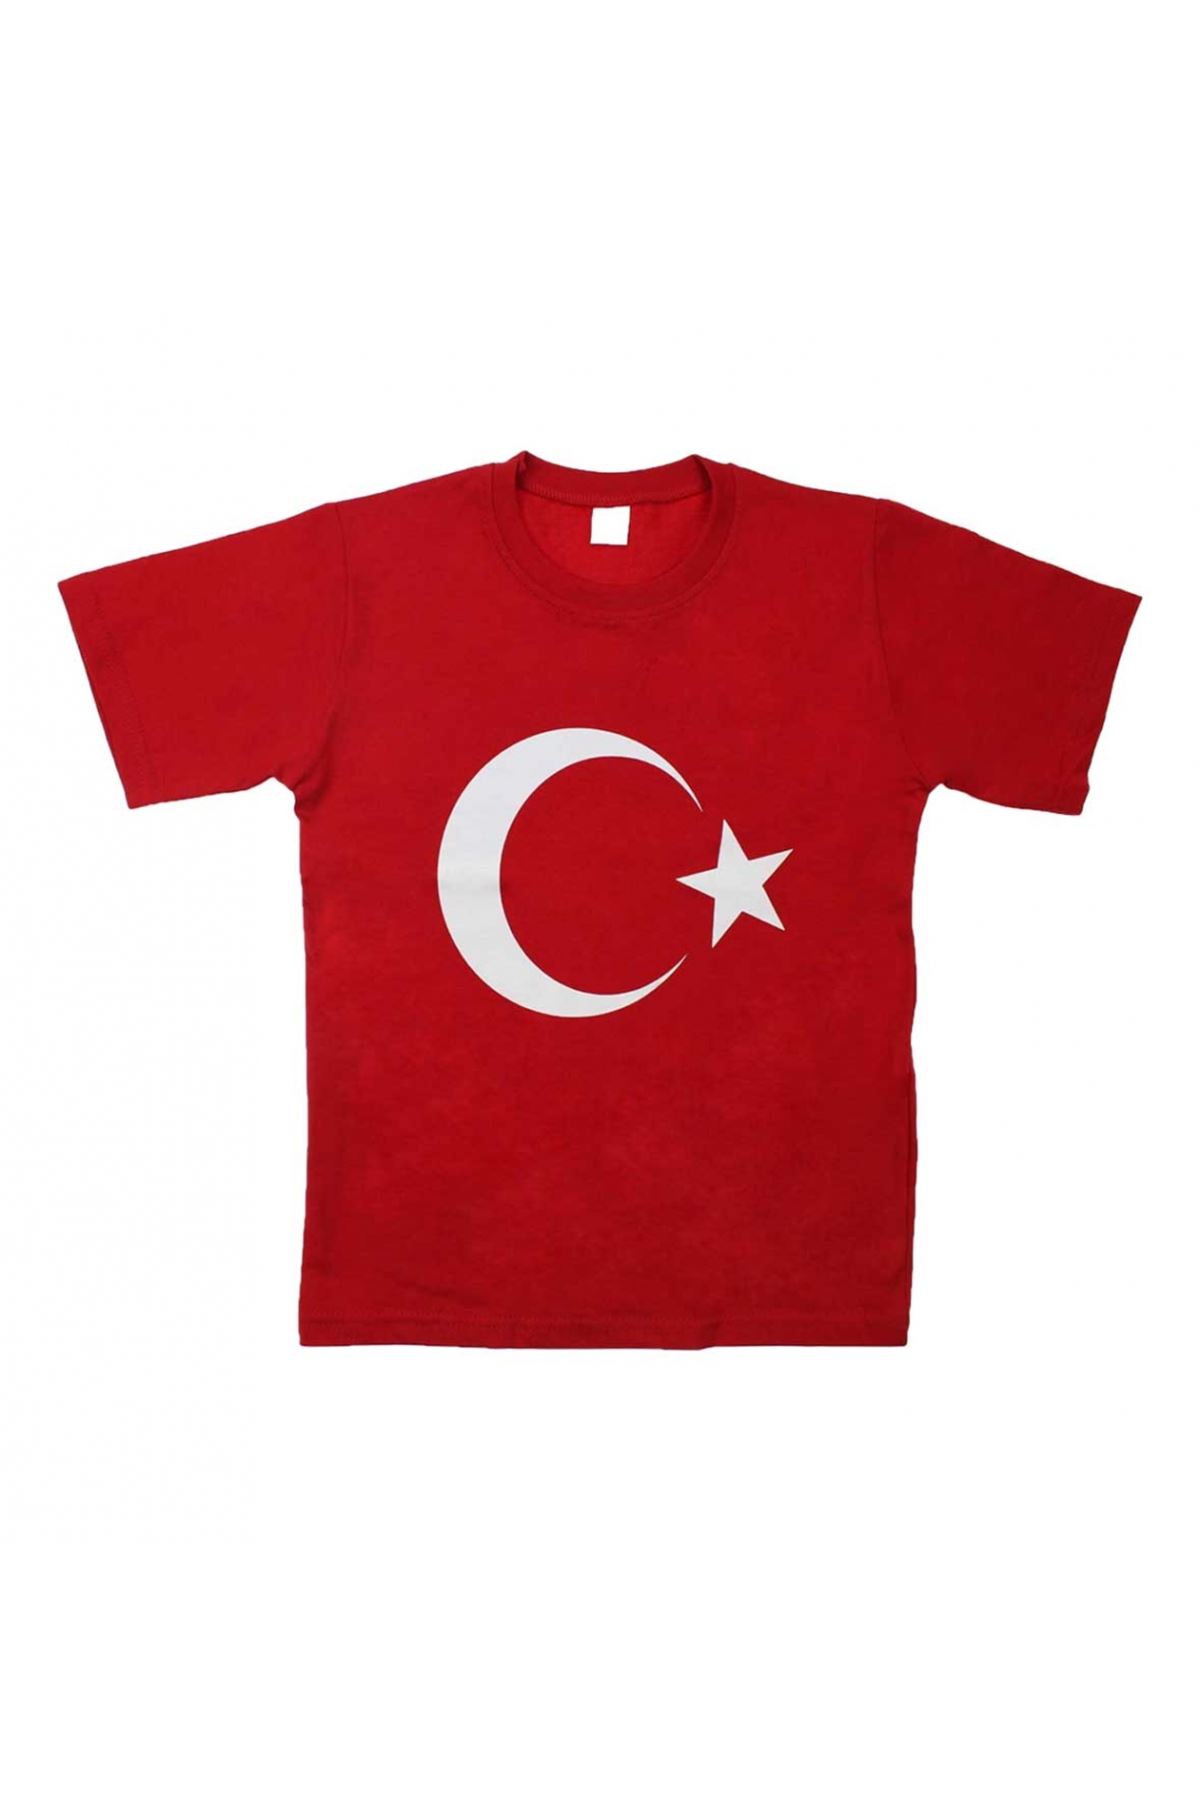 Kırmızı Bayrak Baskılı S-M-L-XL Tişört